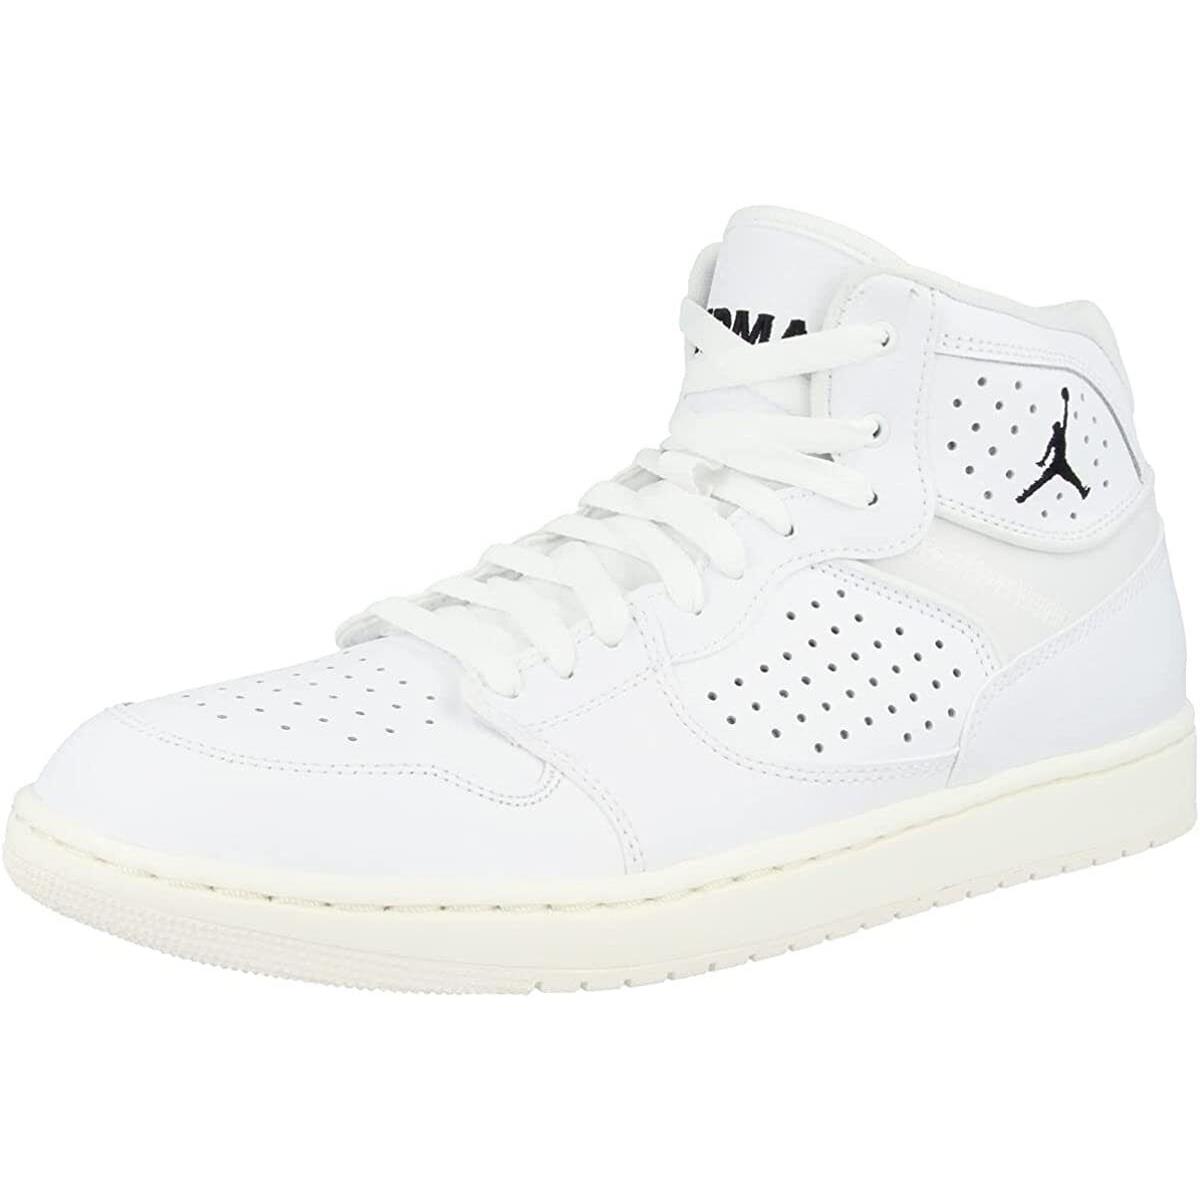 Nike Men`s Air Jordan Access Basketball Jumpman White Sneakers AR3762 100 Shoes - White